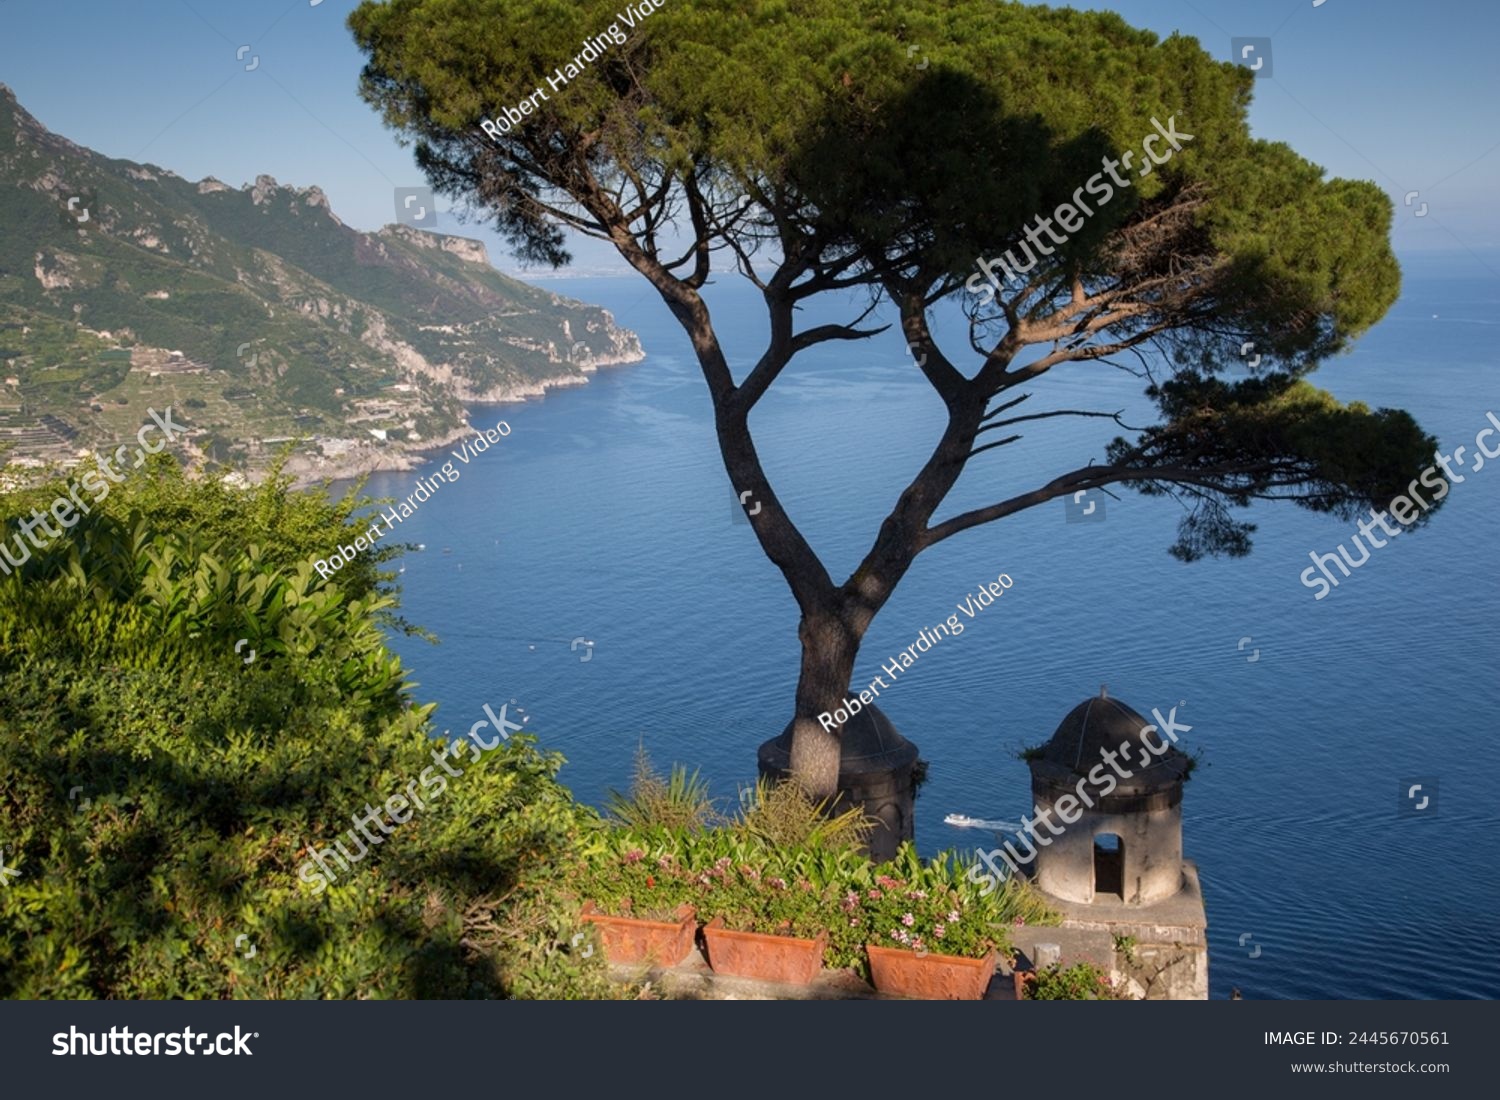 Villa Rufolo, Ravello, Costiera Amalfitana (Amalfi Coast), UNESCO World Heritage Site, Campania, Italy, Europe #2445670561